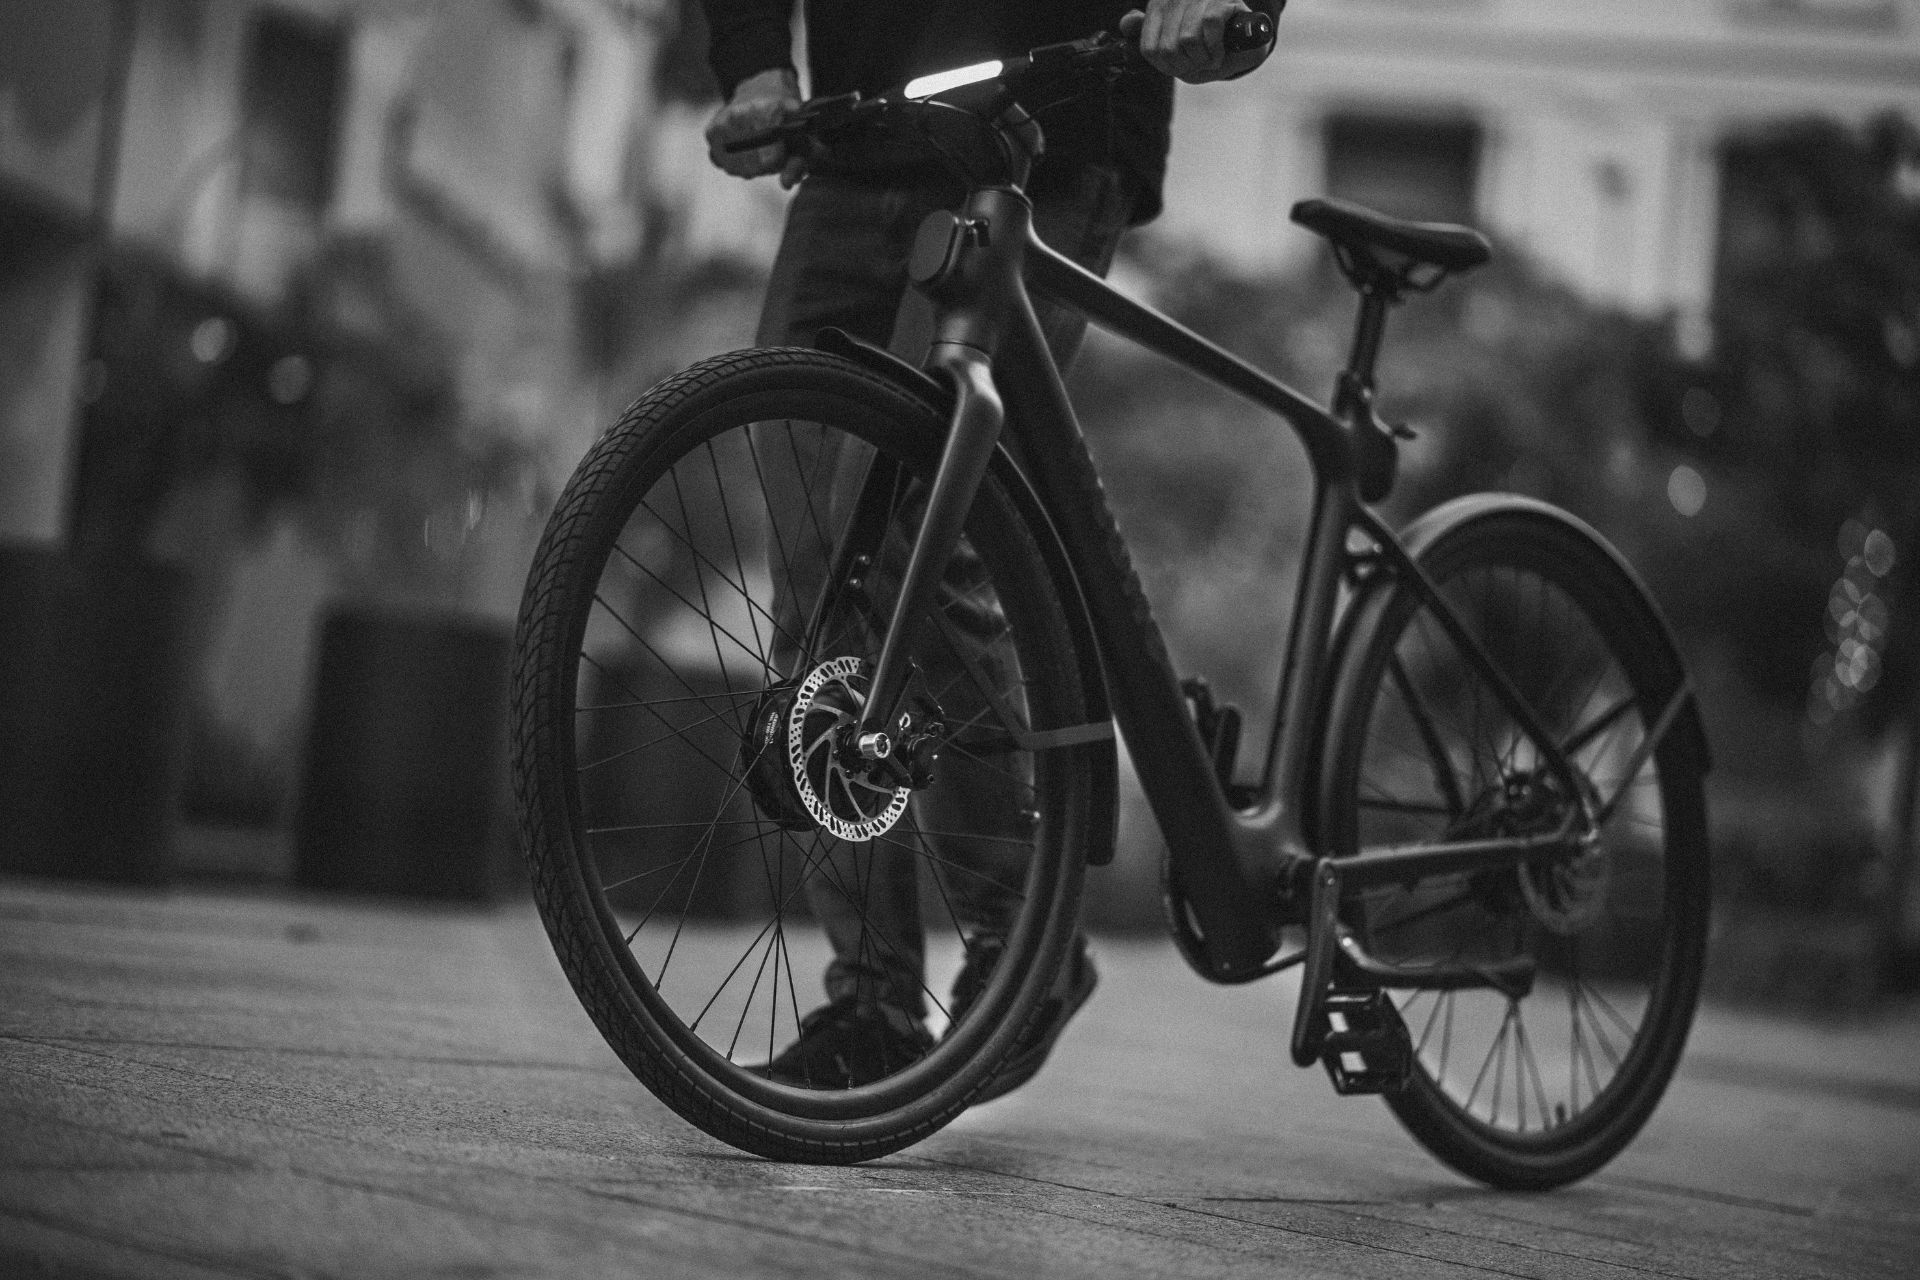 Modmo Saigon+ Electric Bicycle - RRP £2800 - Size L (Rider 175-190cm) - Image 14 of 19